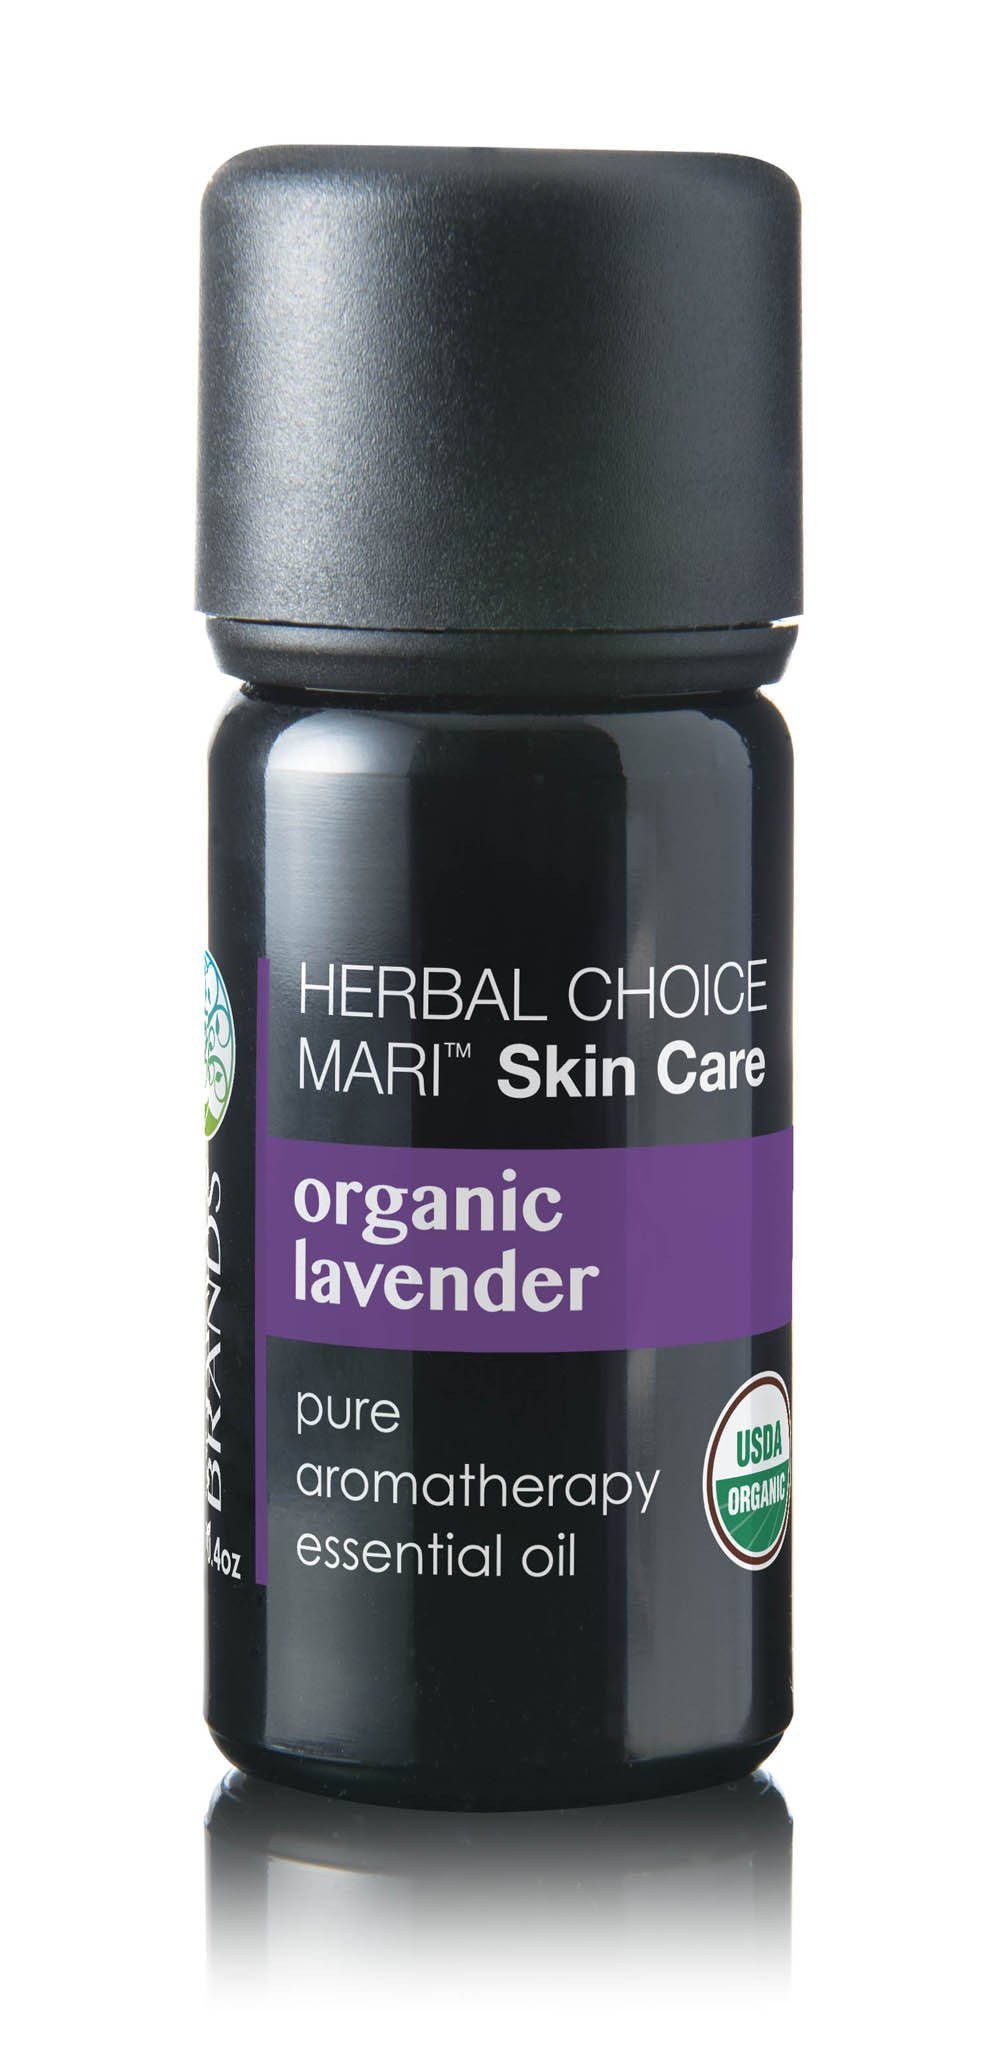 Herbal Choice Mari Organic Lavender Essential Oil; 0.3floz Glass